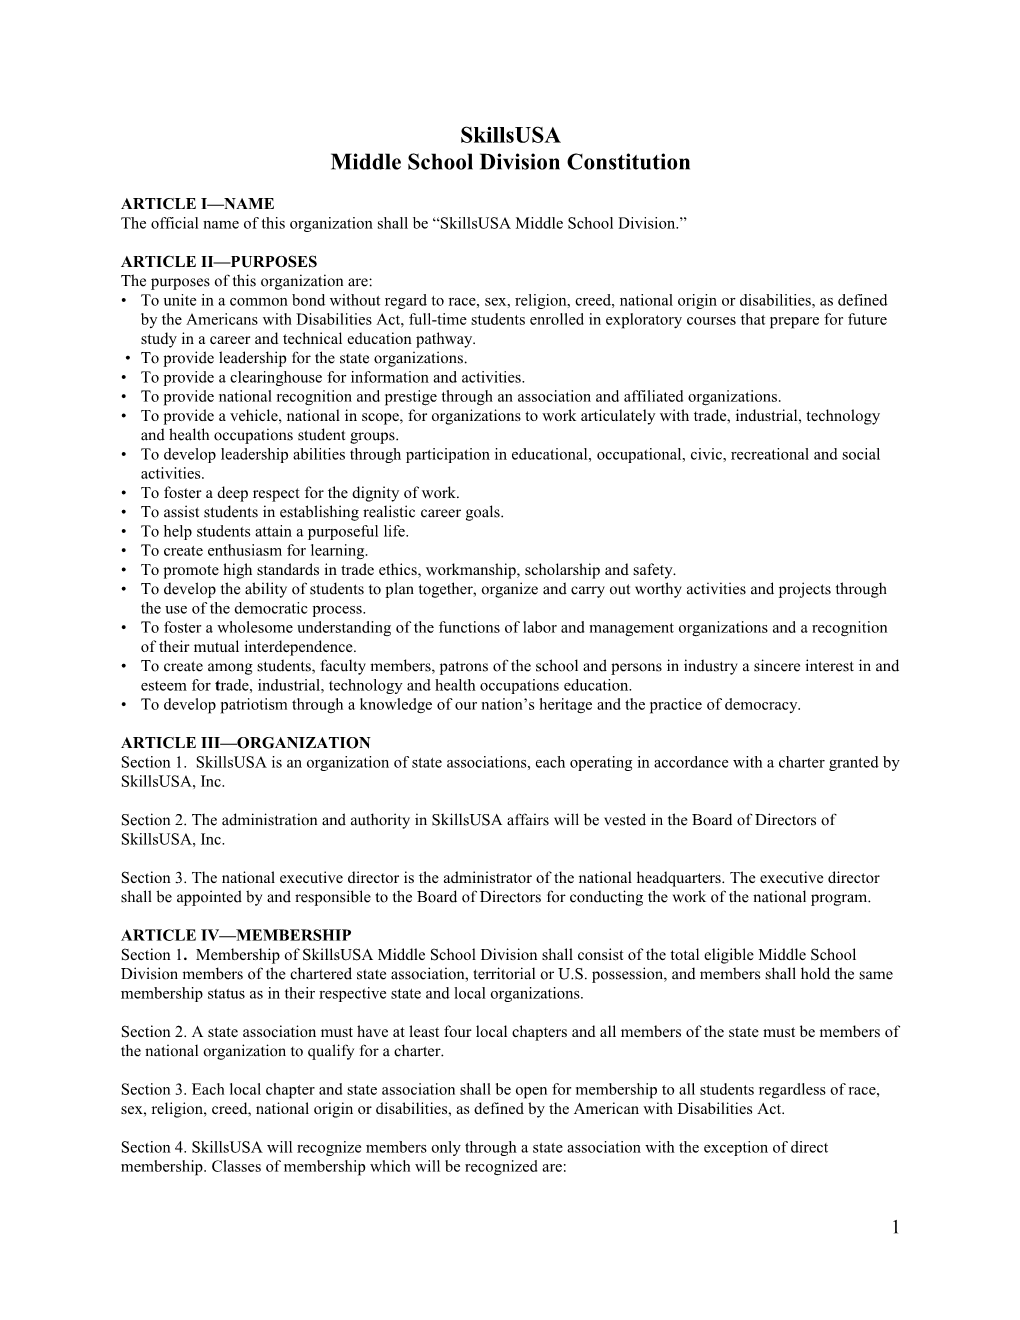 Middle School Division Constitution